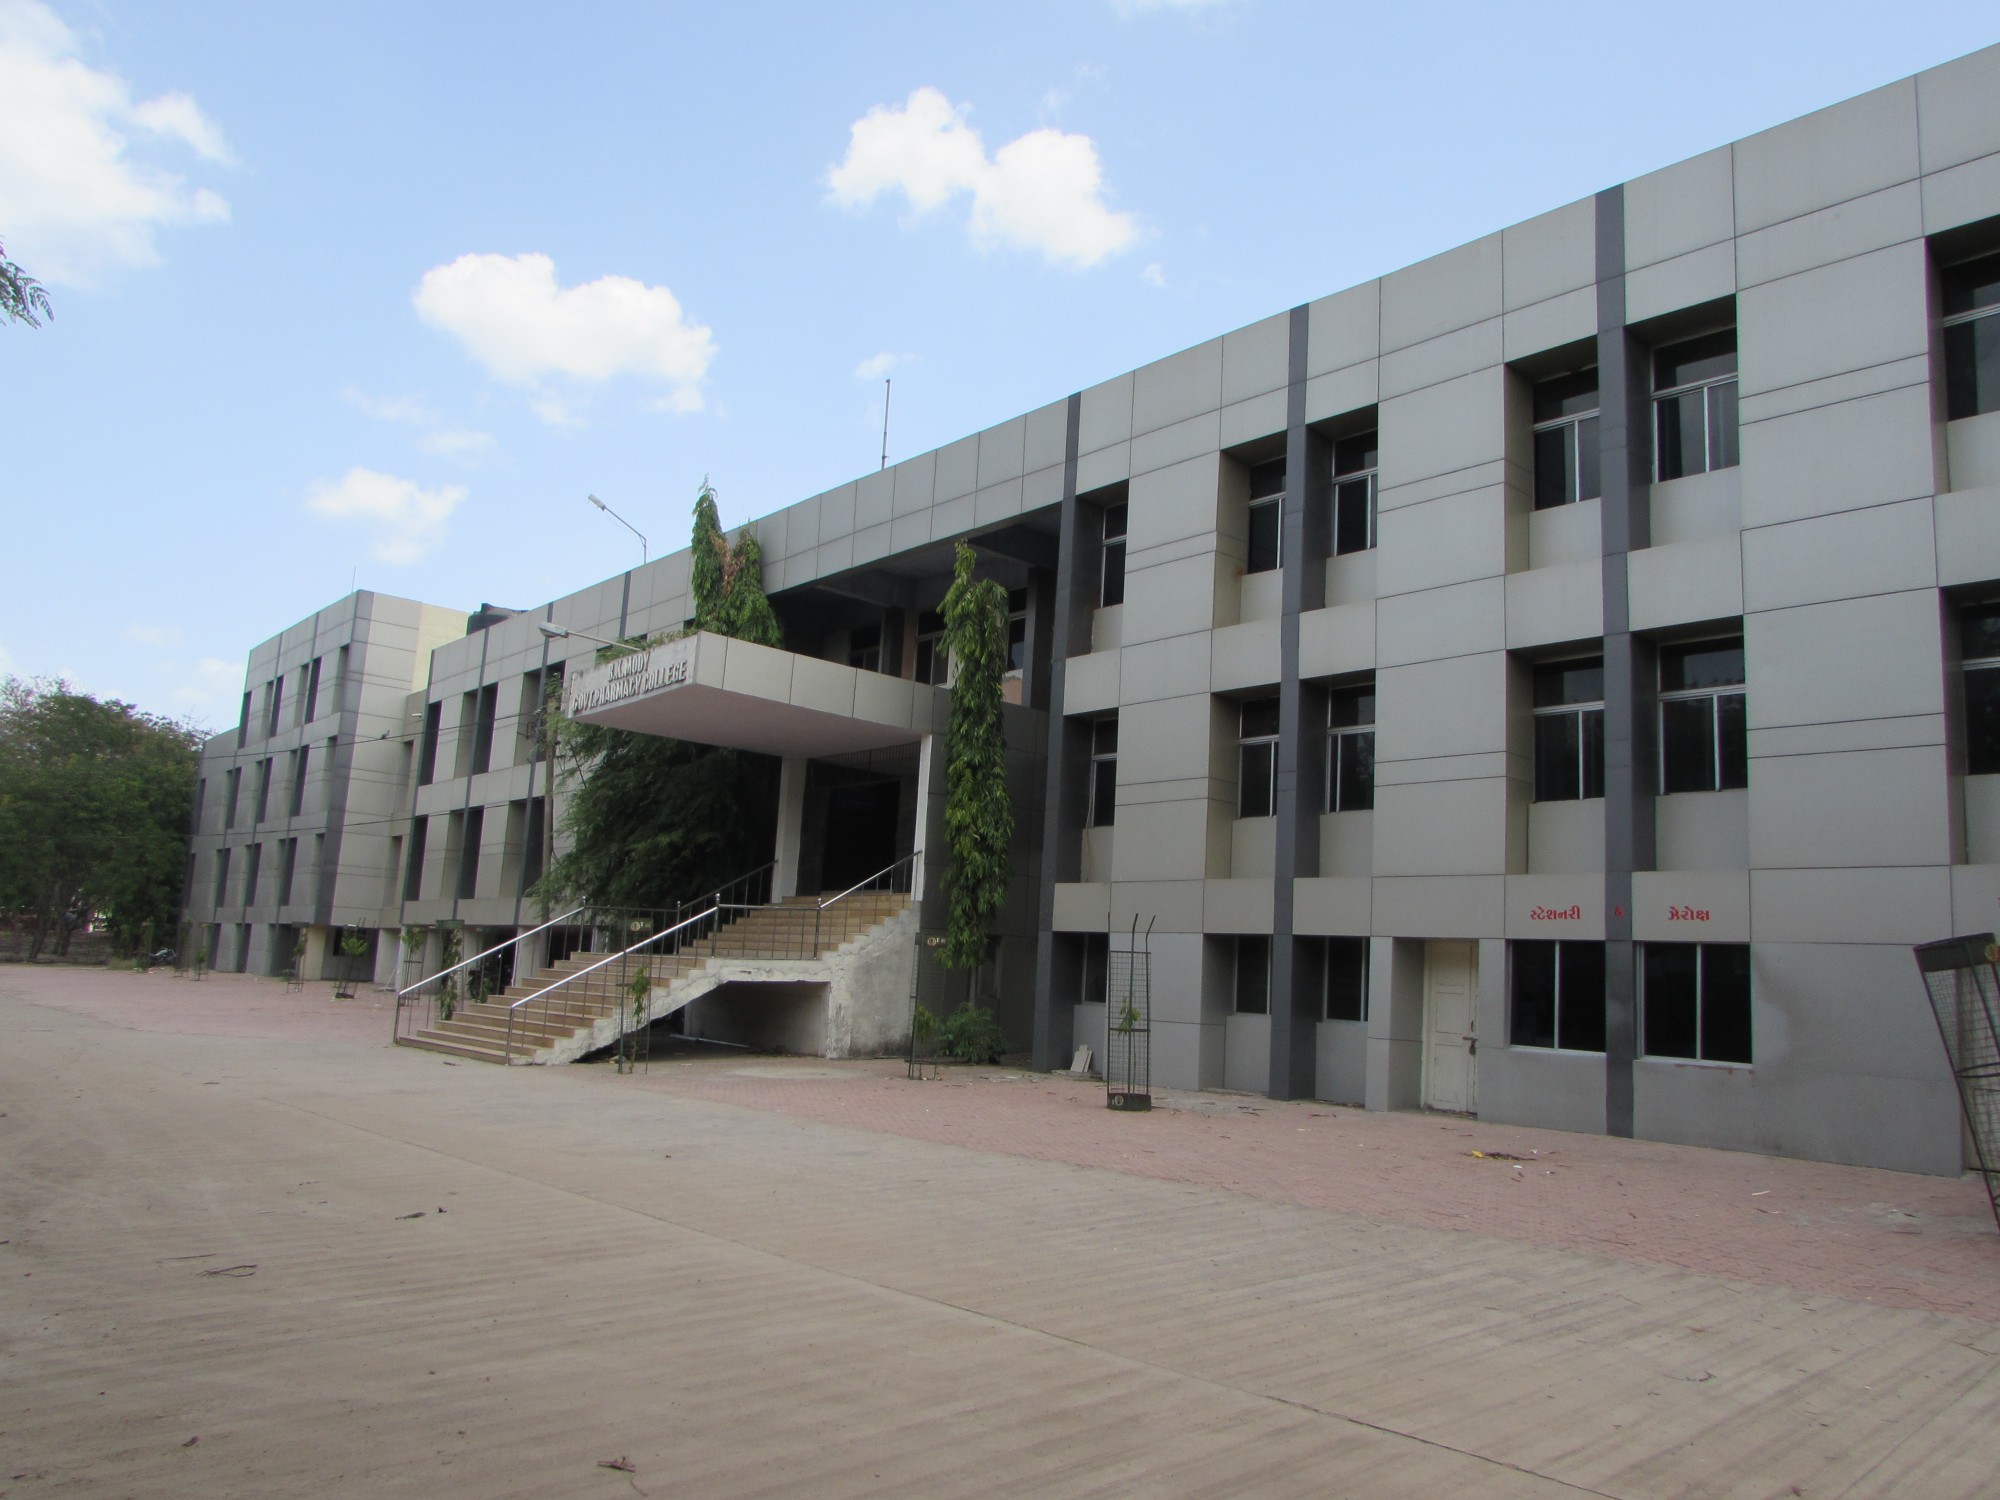 B K Mody Government Pharmacy College